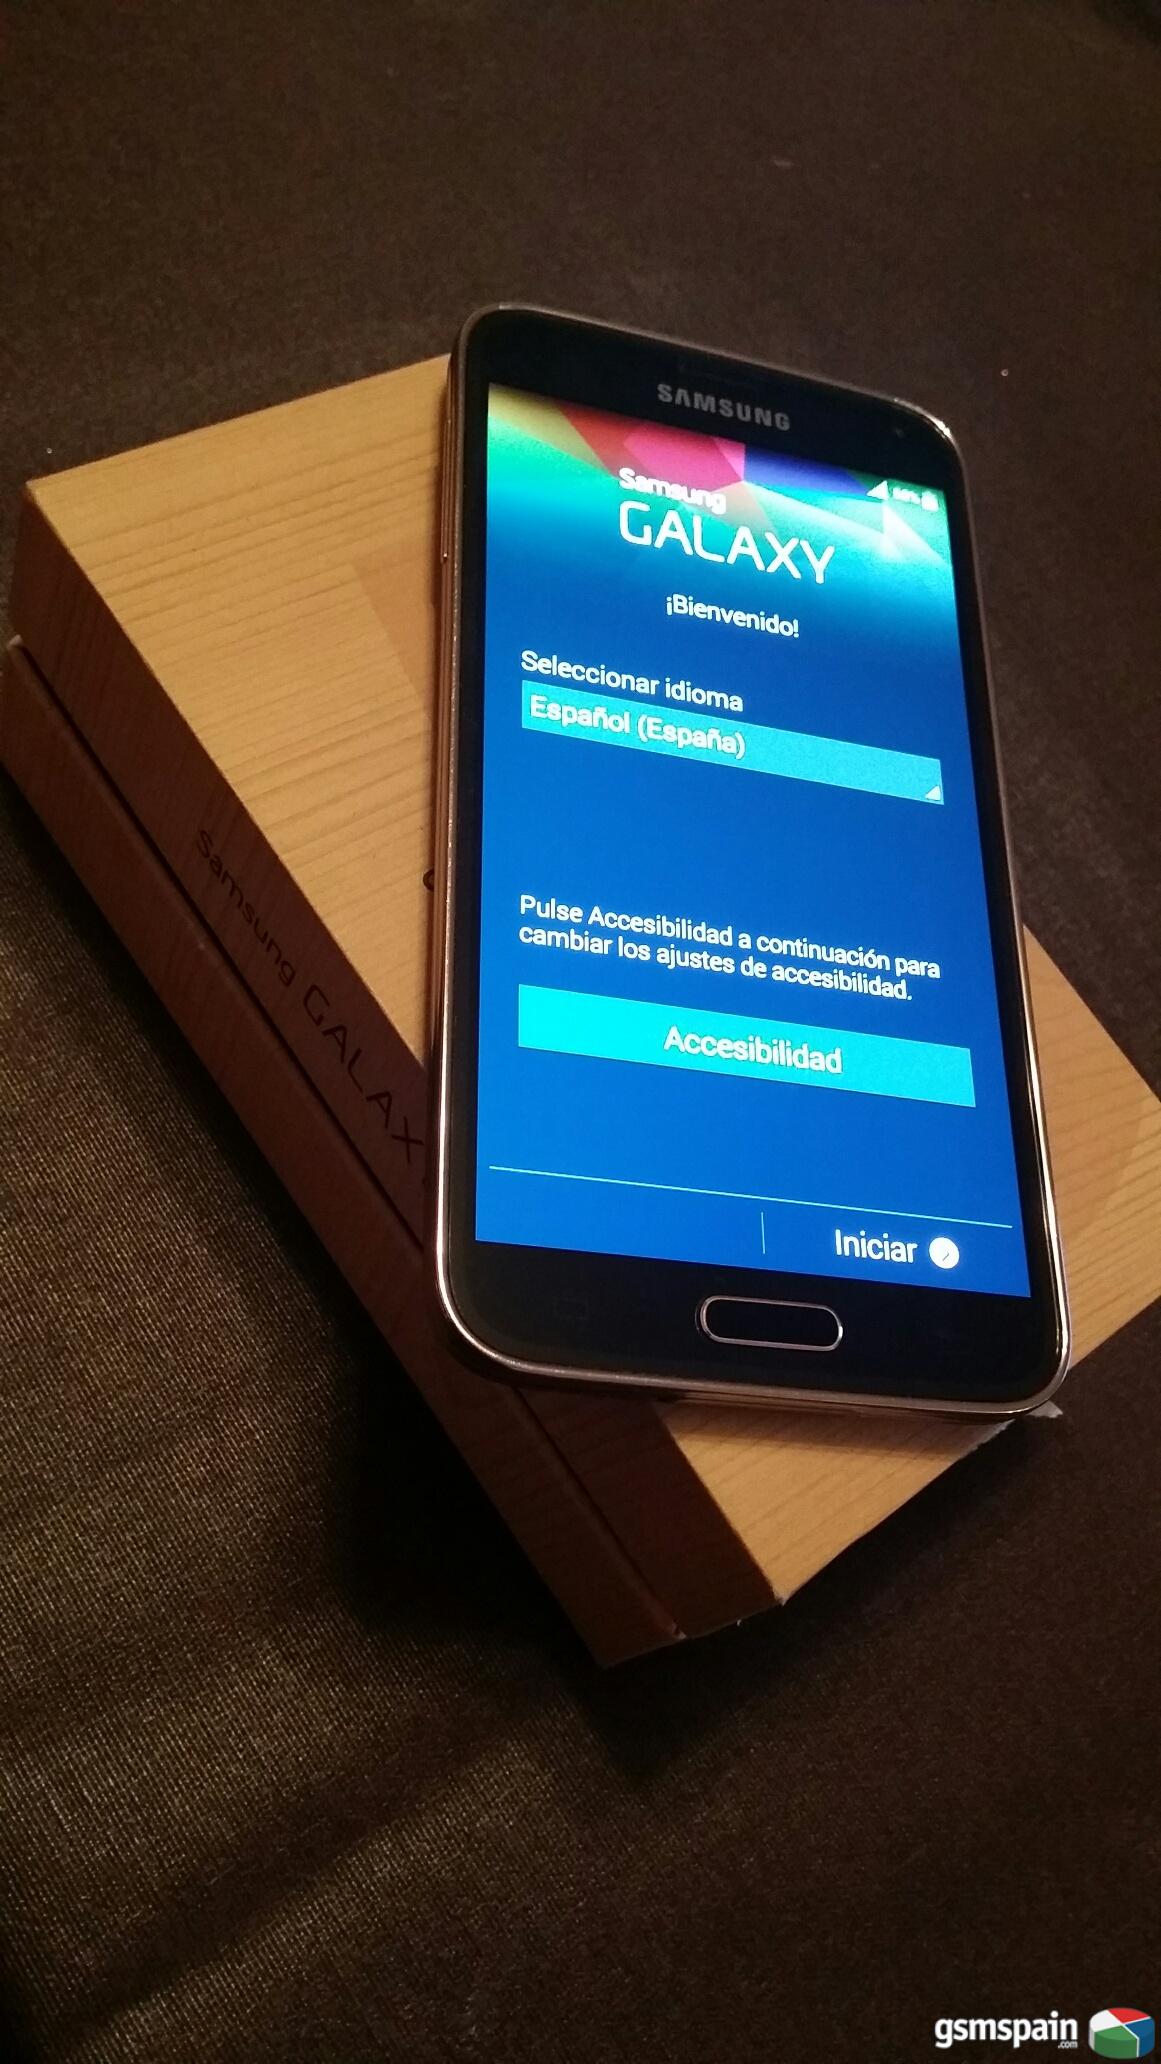 [VENDO] Vendo samsung Galaxy S5 gold libre